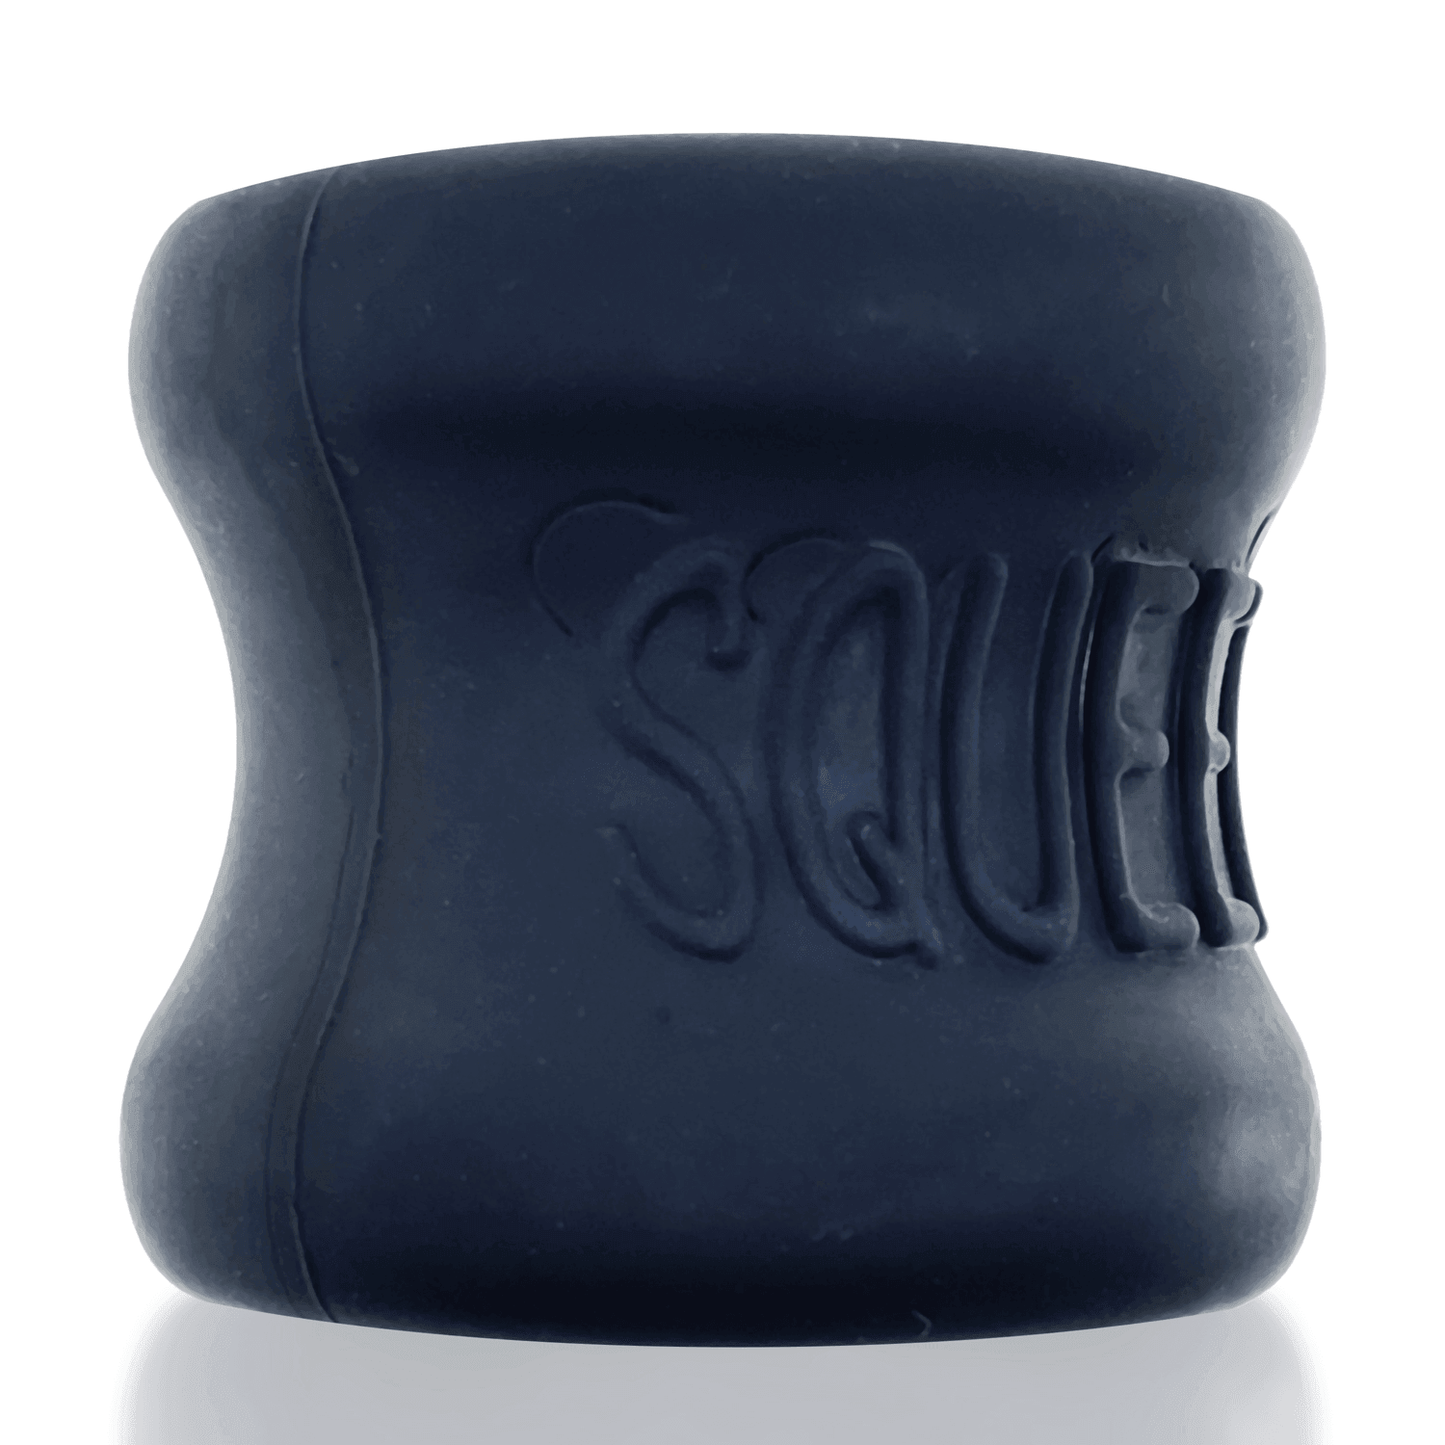 Squeeze Soft - Grip Ballstretcher - Night Black - My Sex Toy Hub